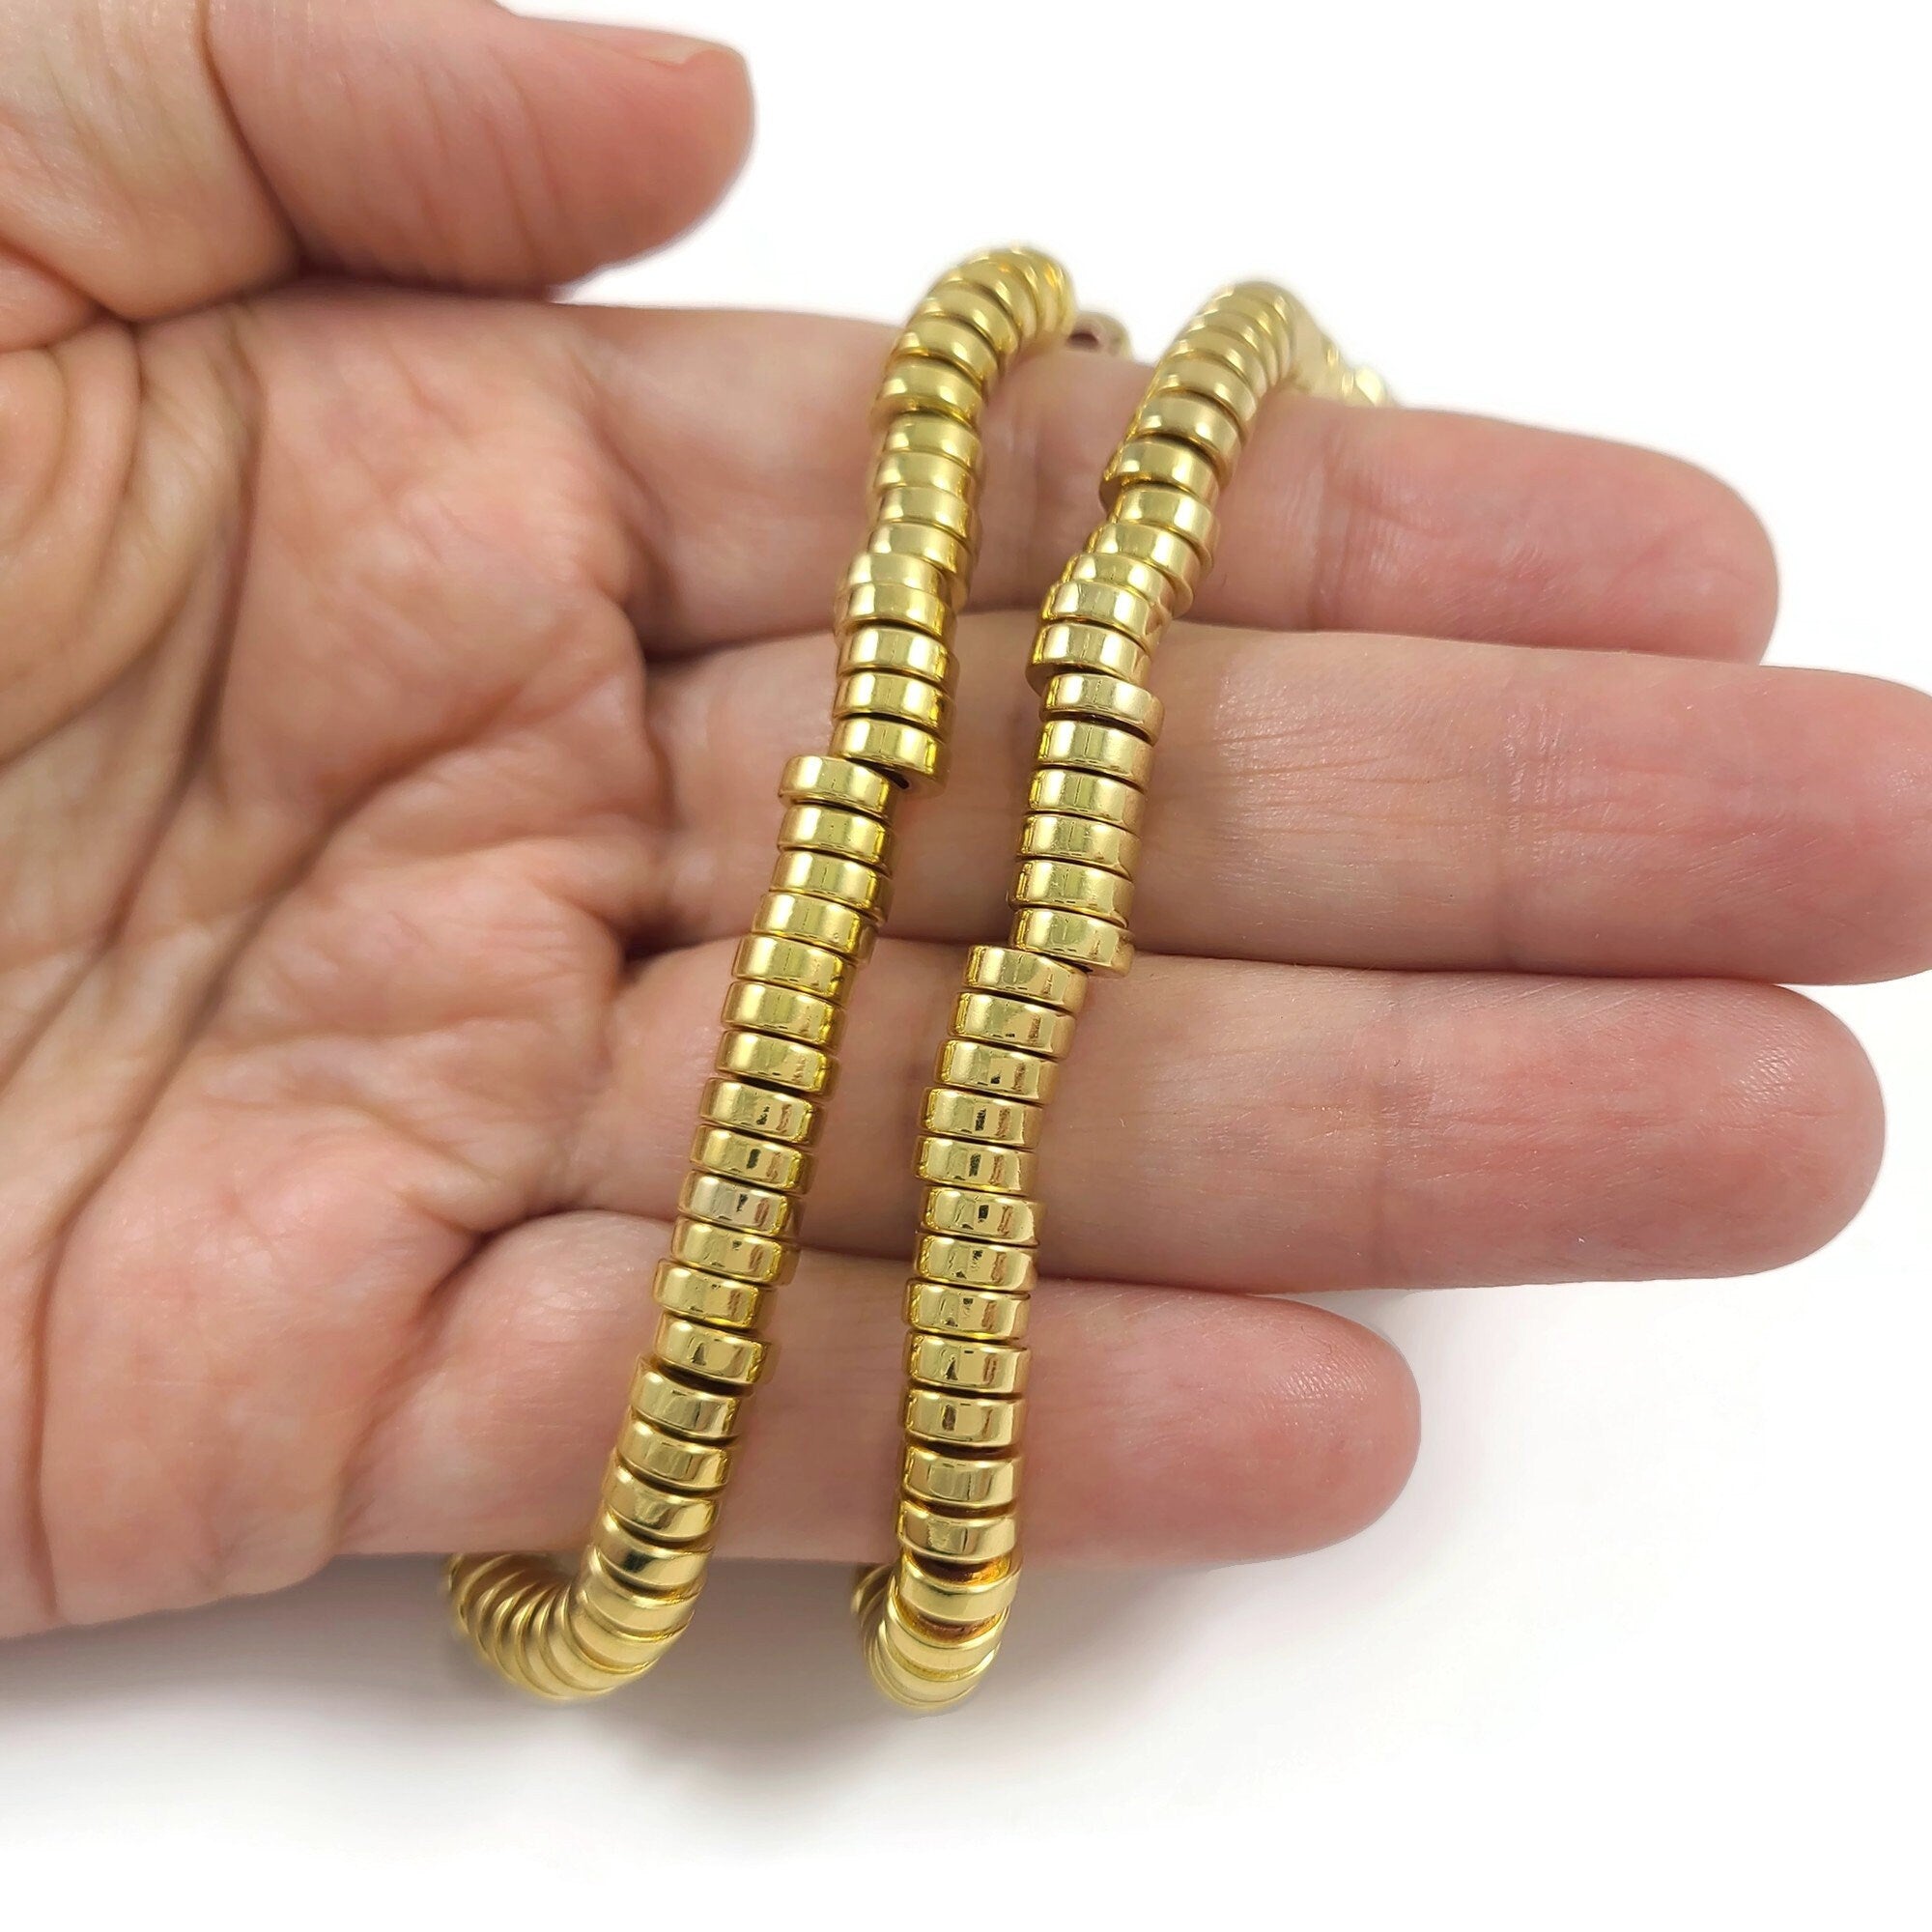 Gold hematite heishi beads, 6mm gemstone rondelle spacer beads, Jewelry making supplies